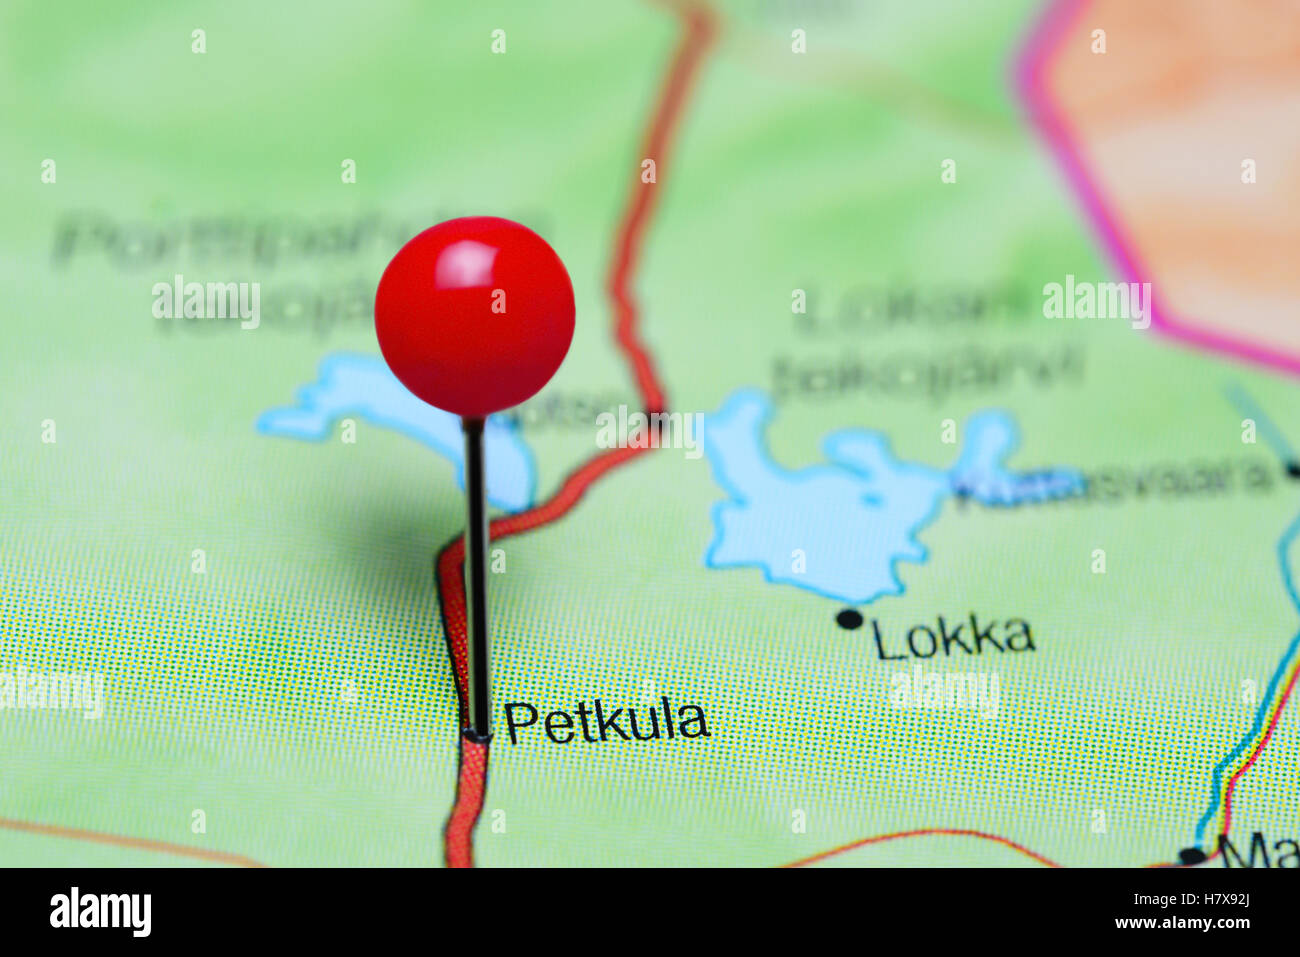 Petkula pinned on a map of Finland Stock Photo